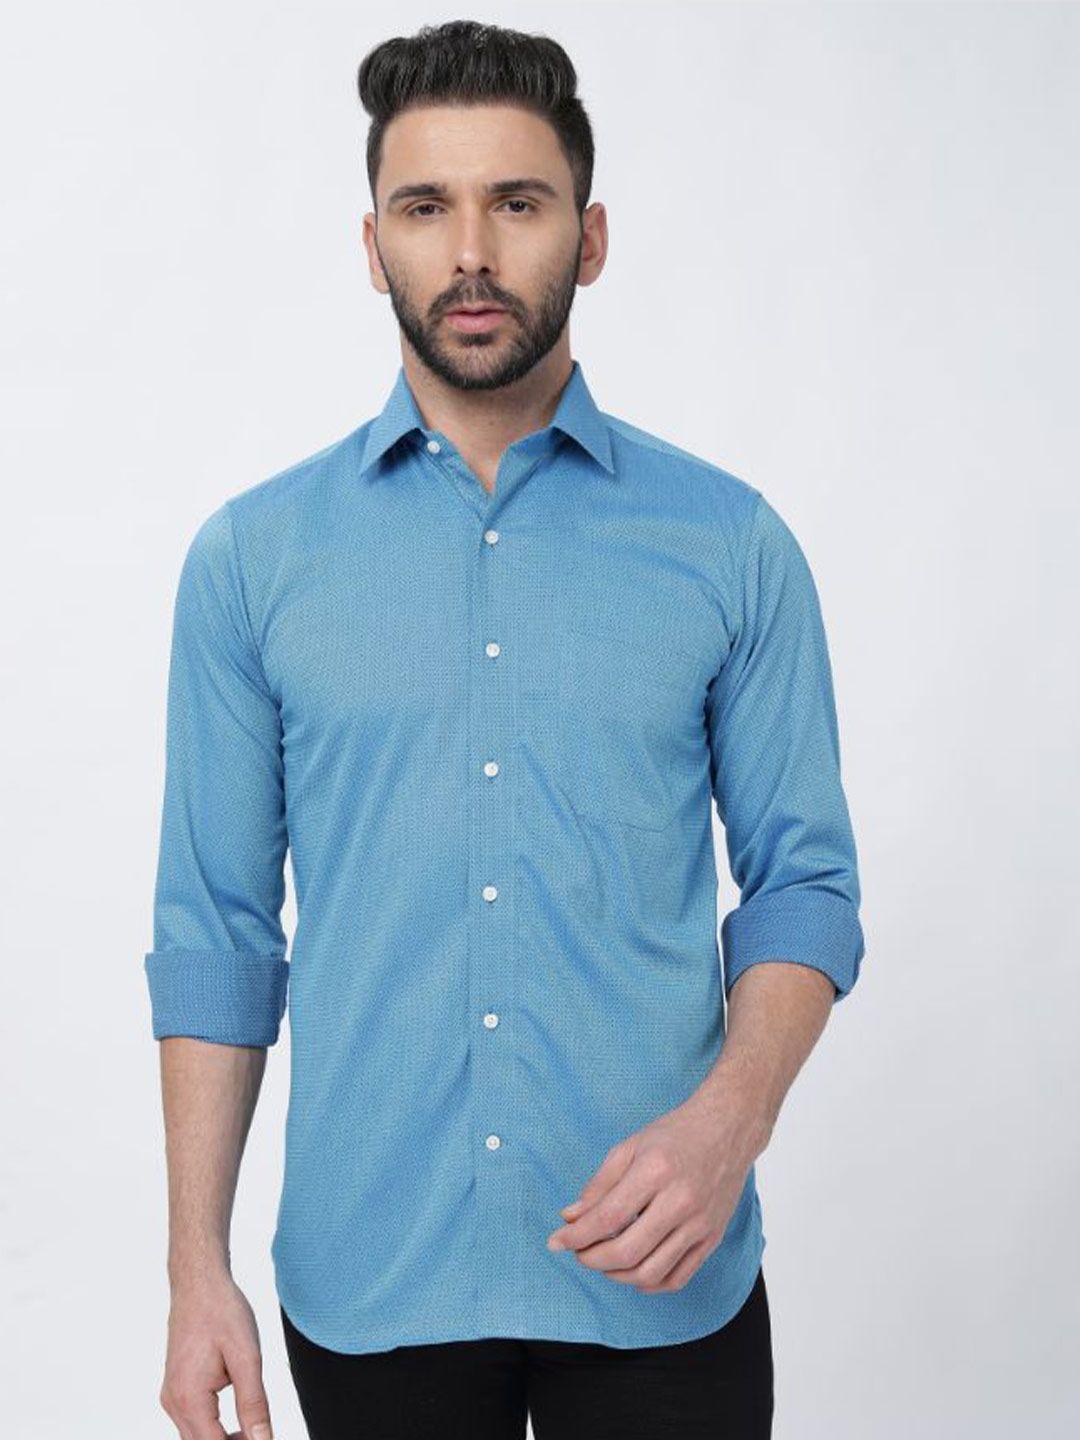 french crown men blue standard opaque casual shirt